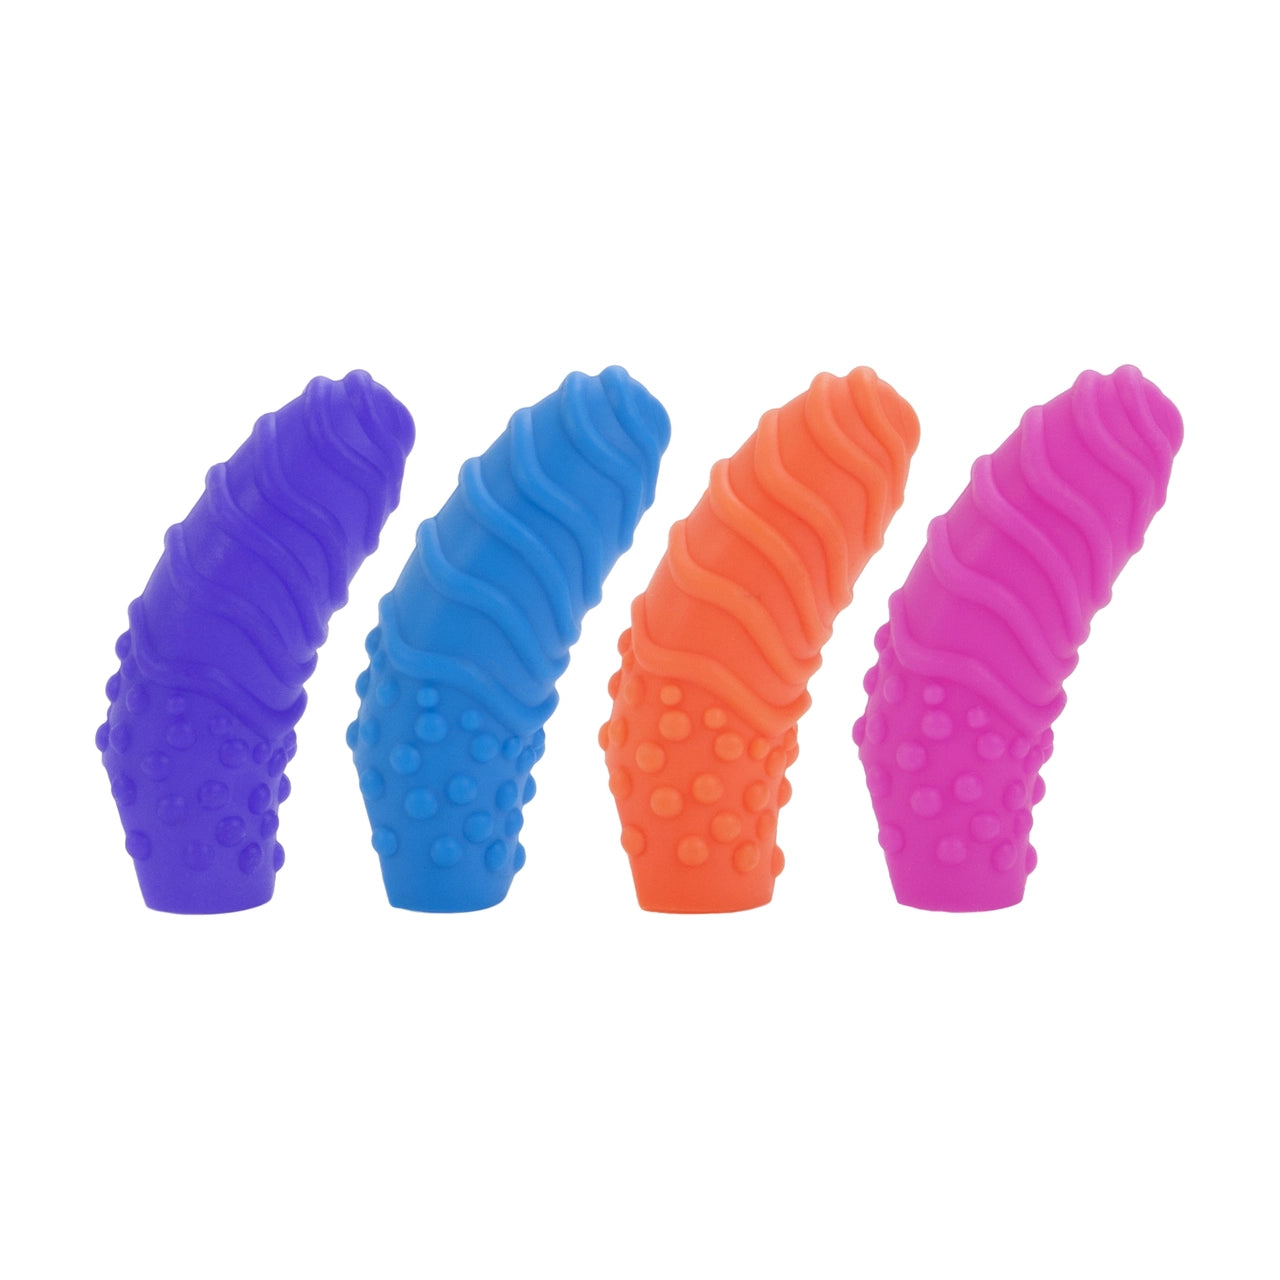 Purple, blue, orange and pink finger swirls lined up